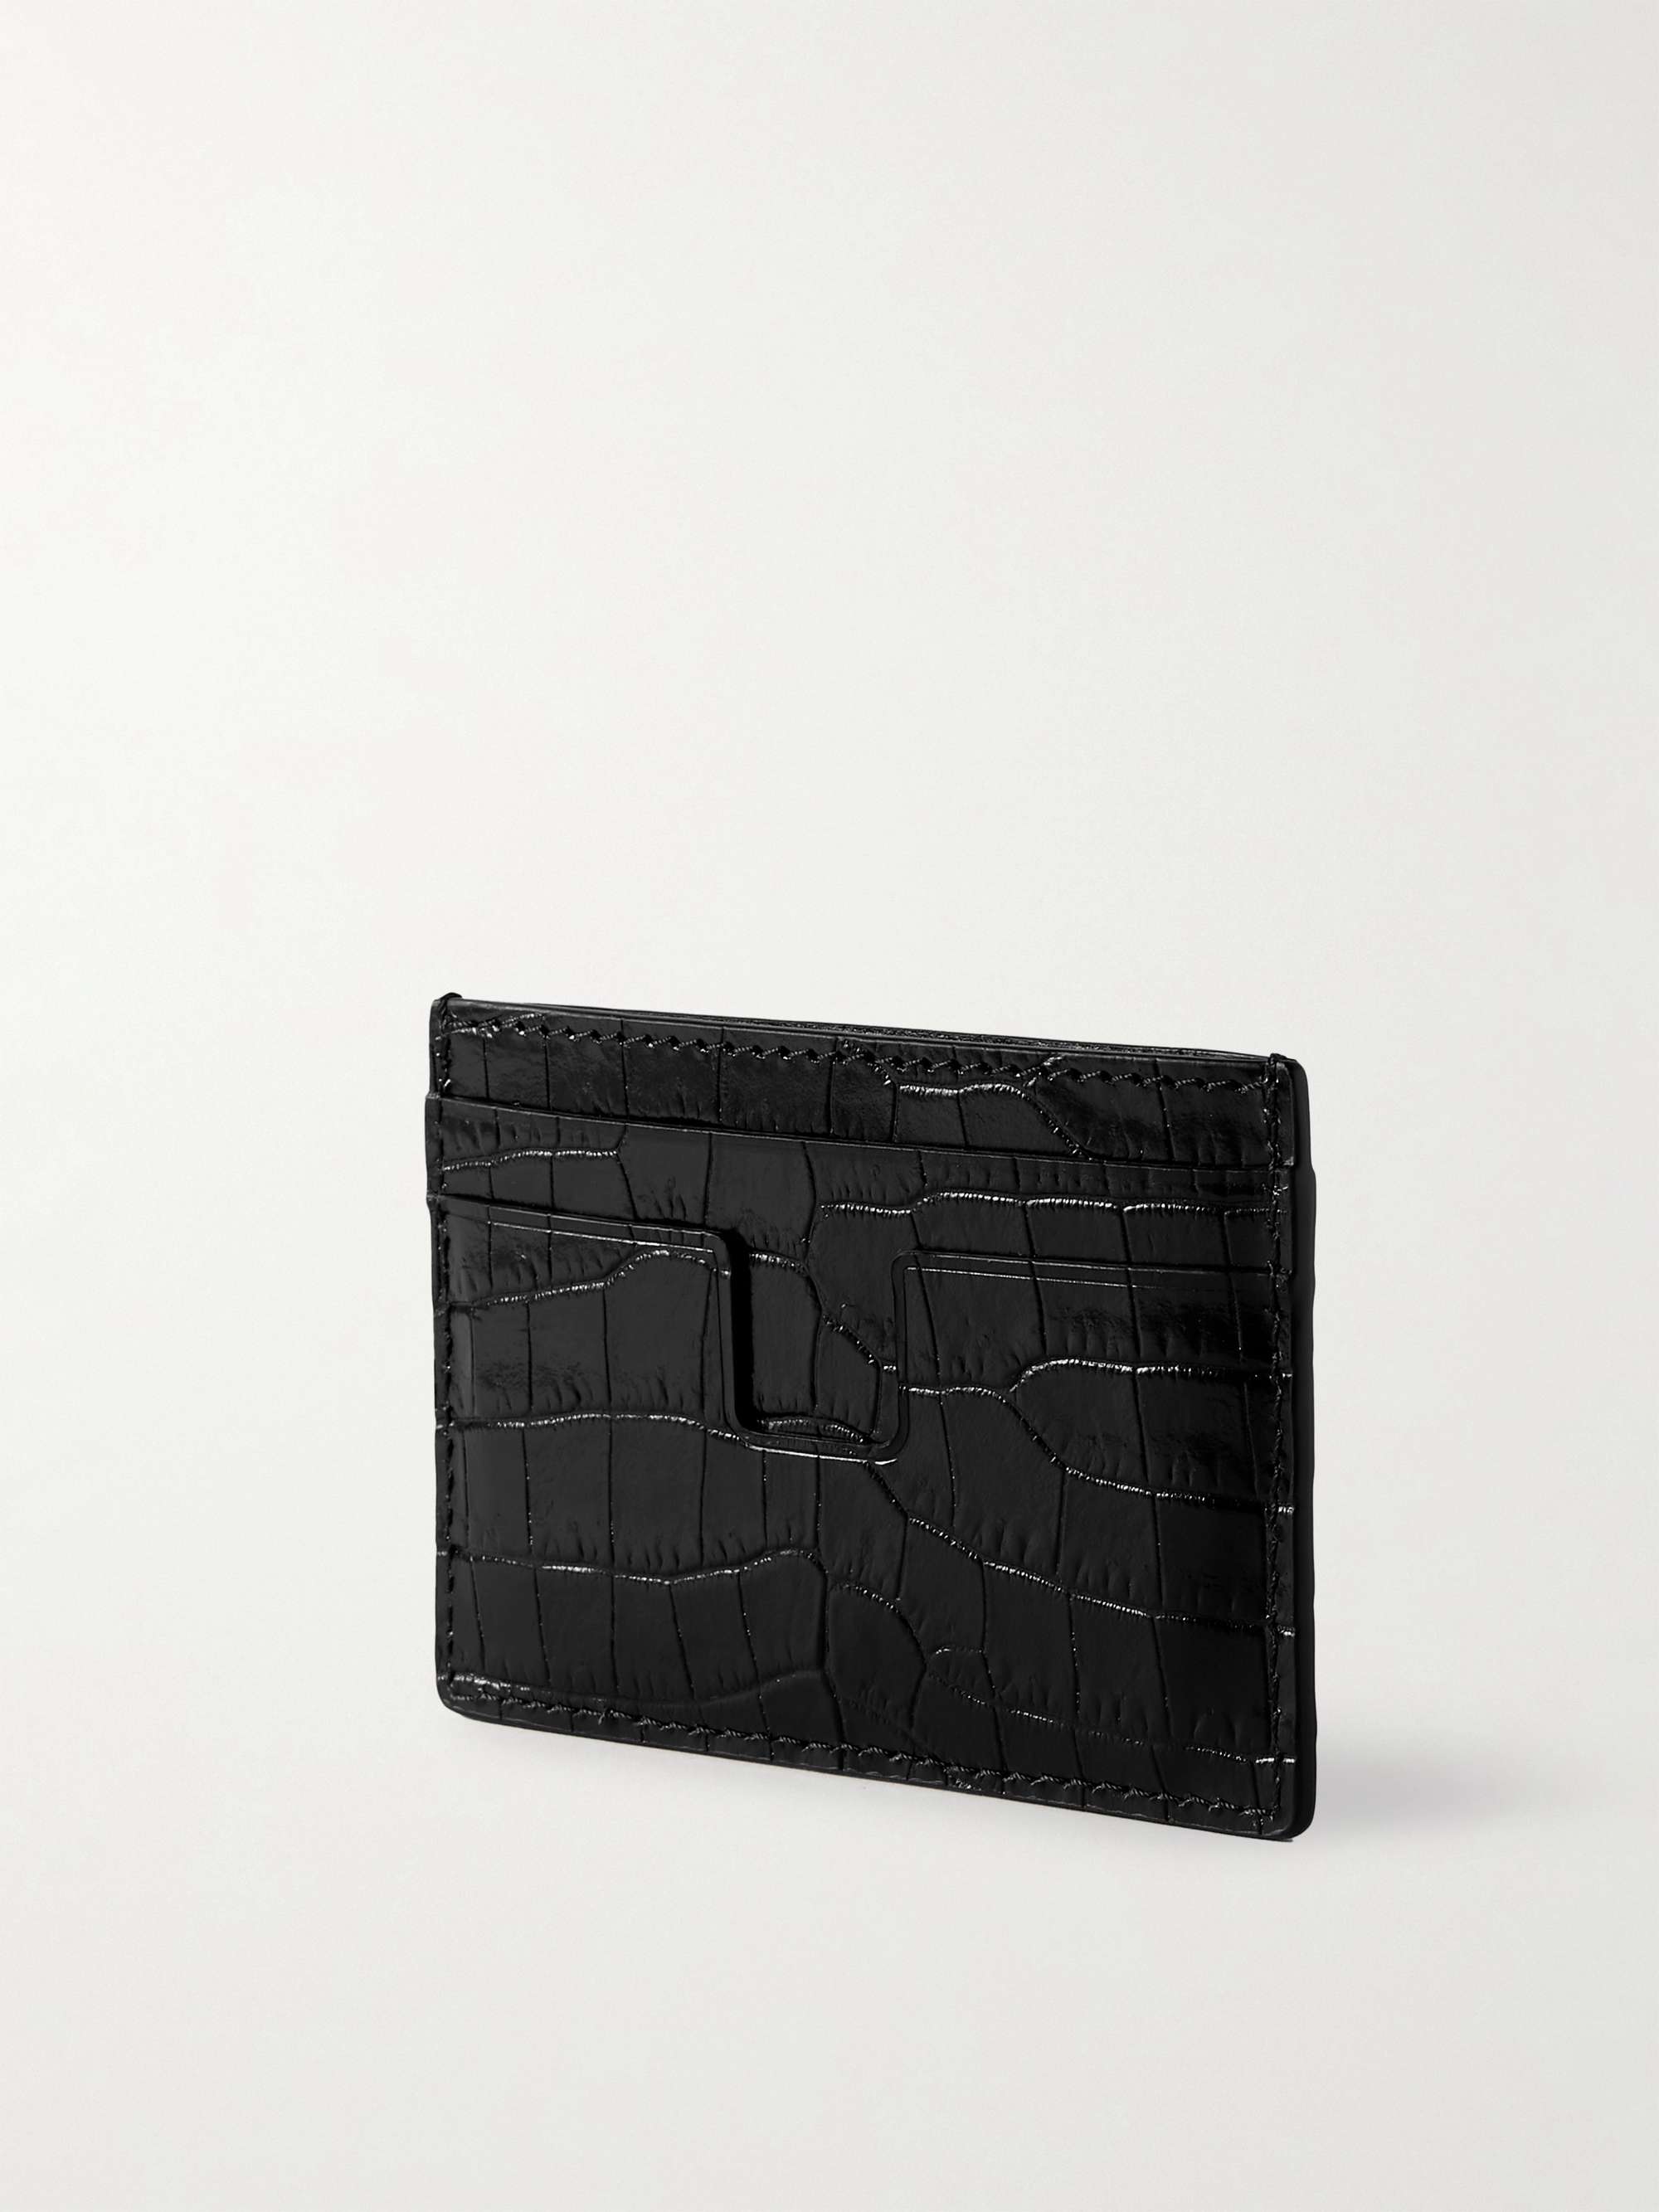 TOM FORD Croc-Effect Leather Cardholder